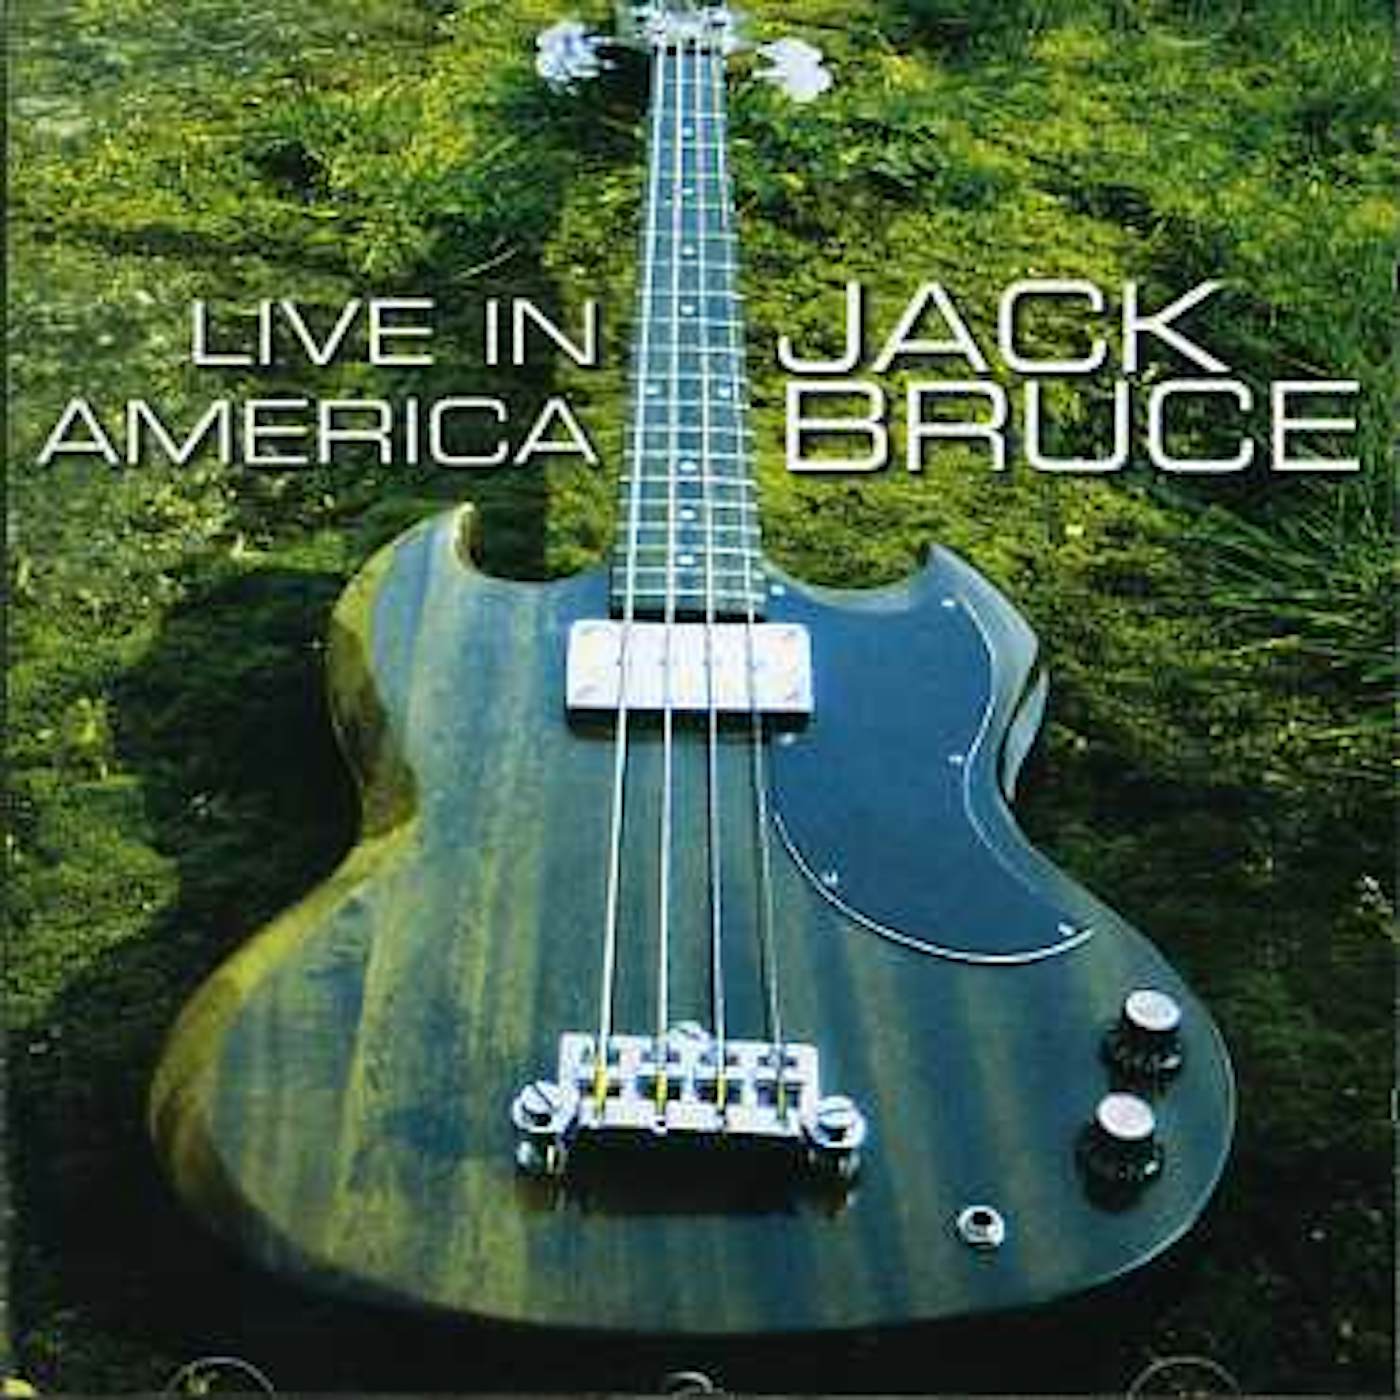 Jack Bruce LIVE IN AMERICA CD